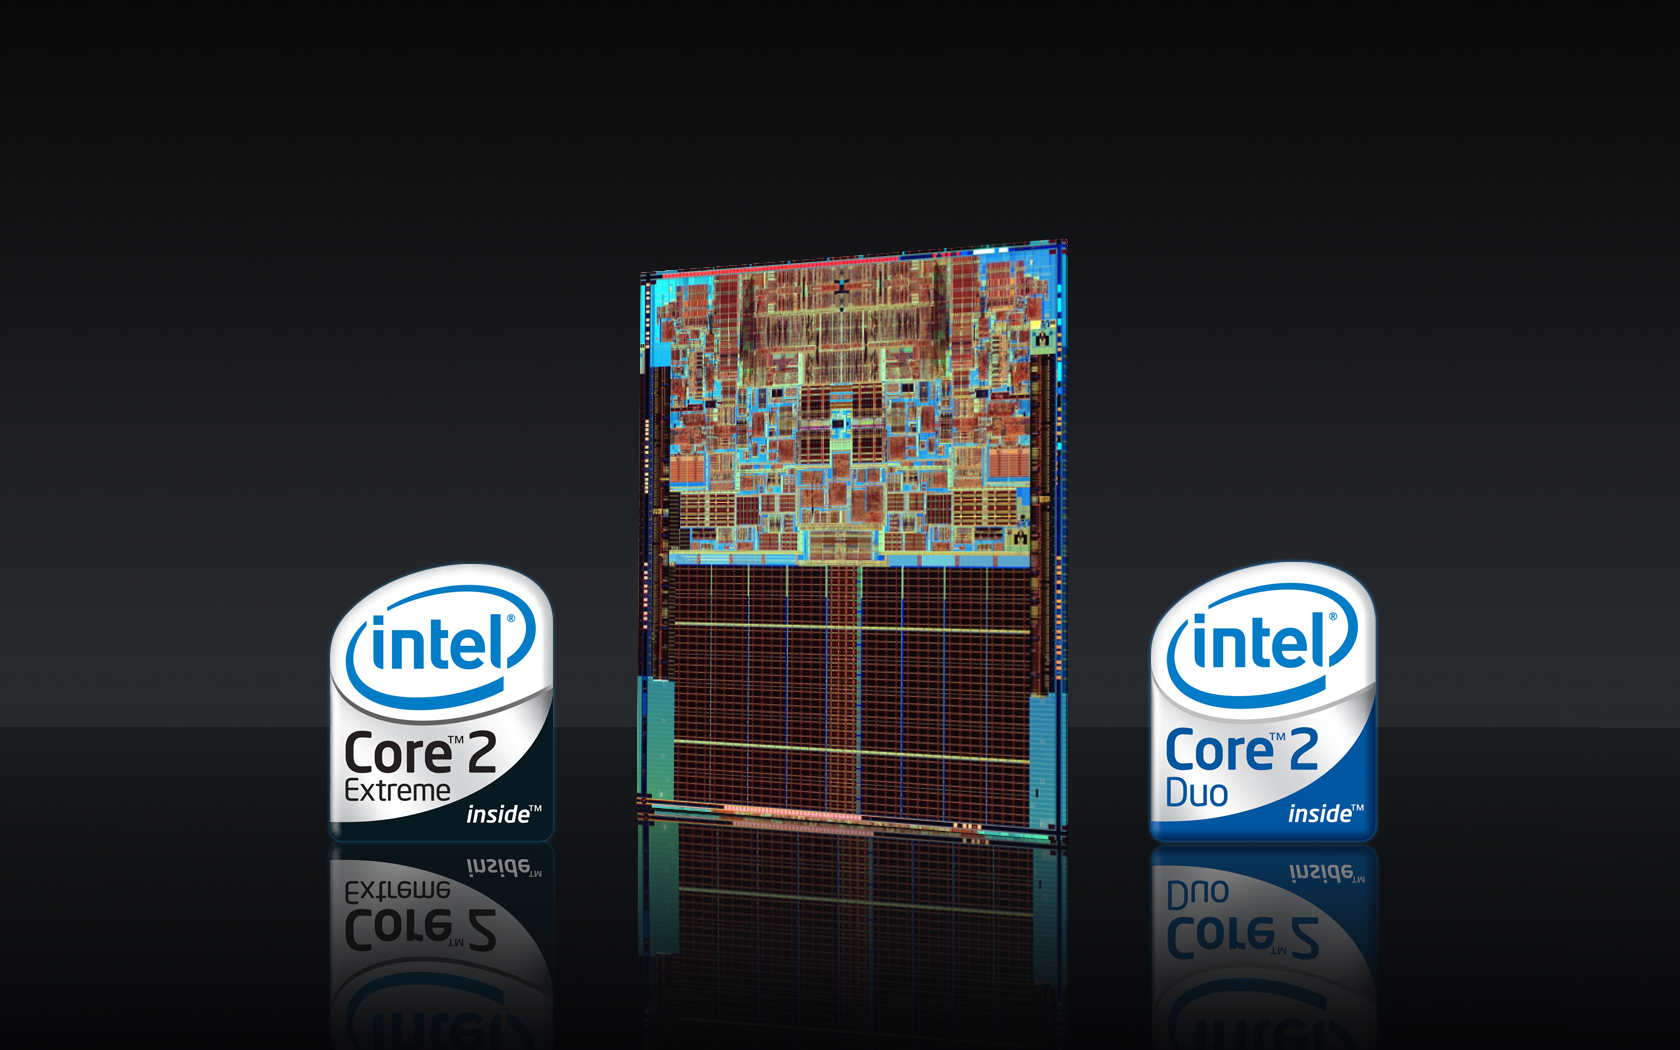 Интел москва. Интел 2 дуо. Intel Core 2x Duo. Intel Core 2 Duo inside. Ячейка Intel Core 2 Duo.